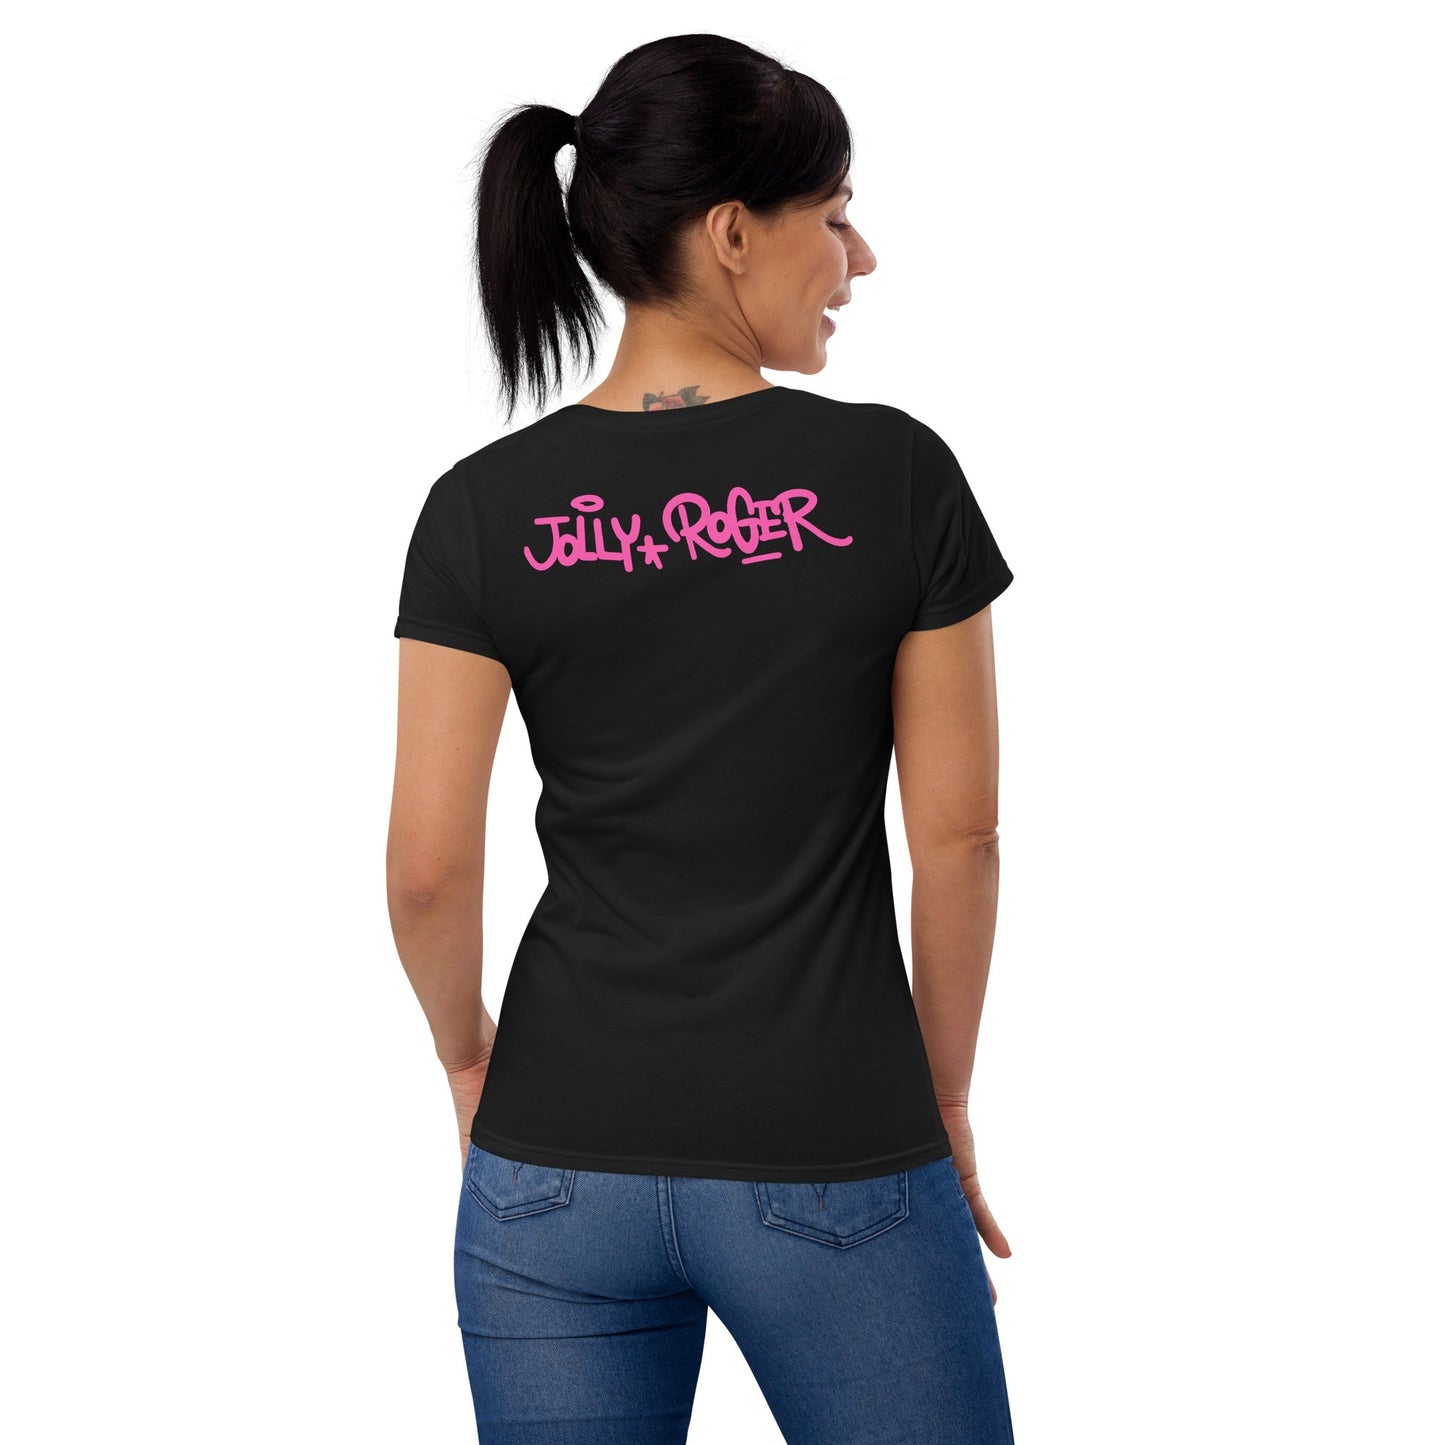 Women's short sleeve t-shirt - Jolly Roger Bar Fortitude Valley